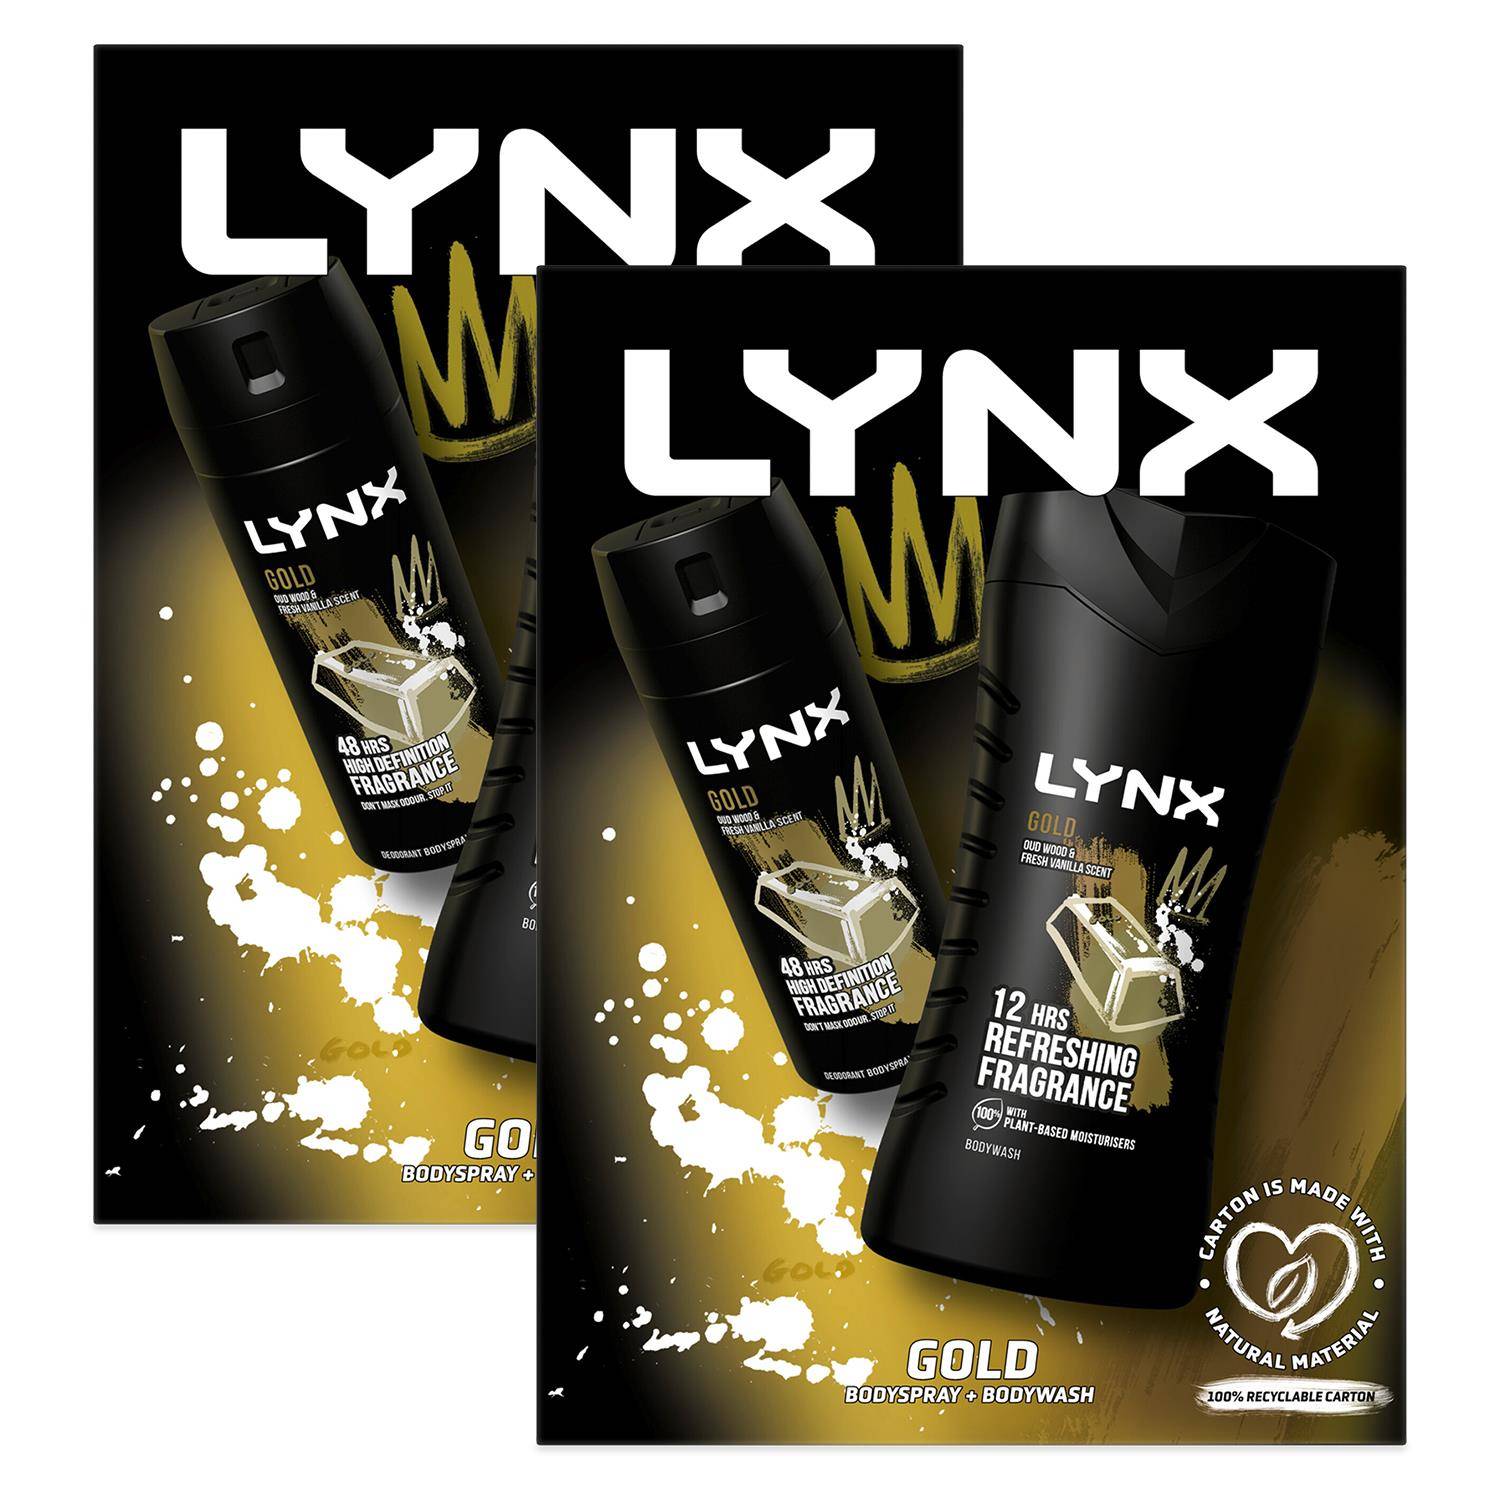 Lynx Gold 2pcs Gift Set For Men Bodywash & Bodyspray Duo Gifts For Him; 2pk